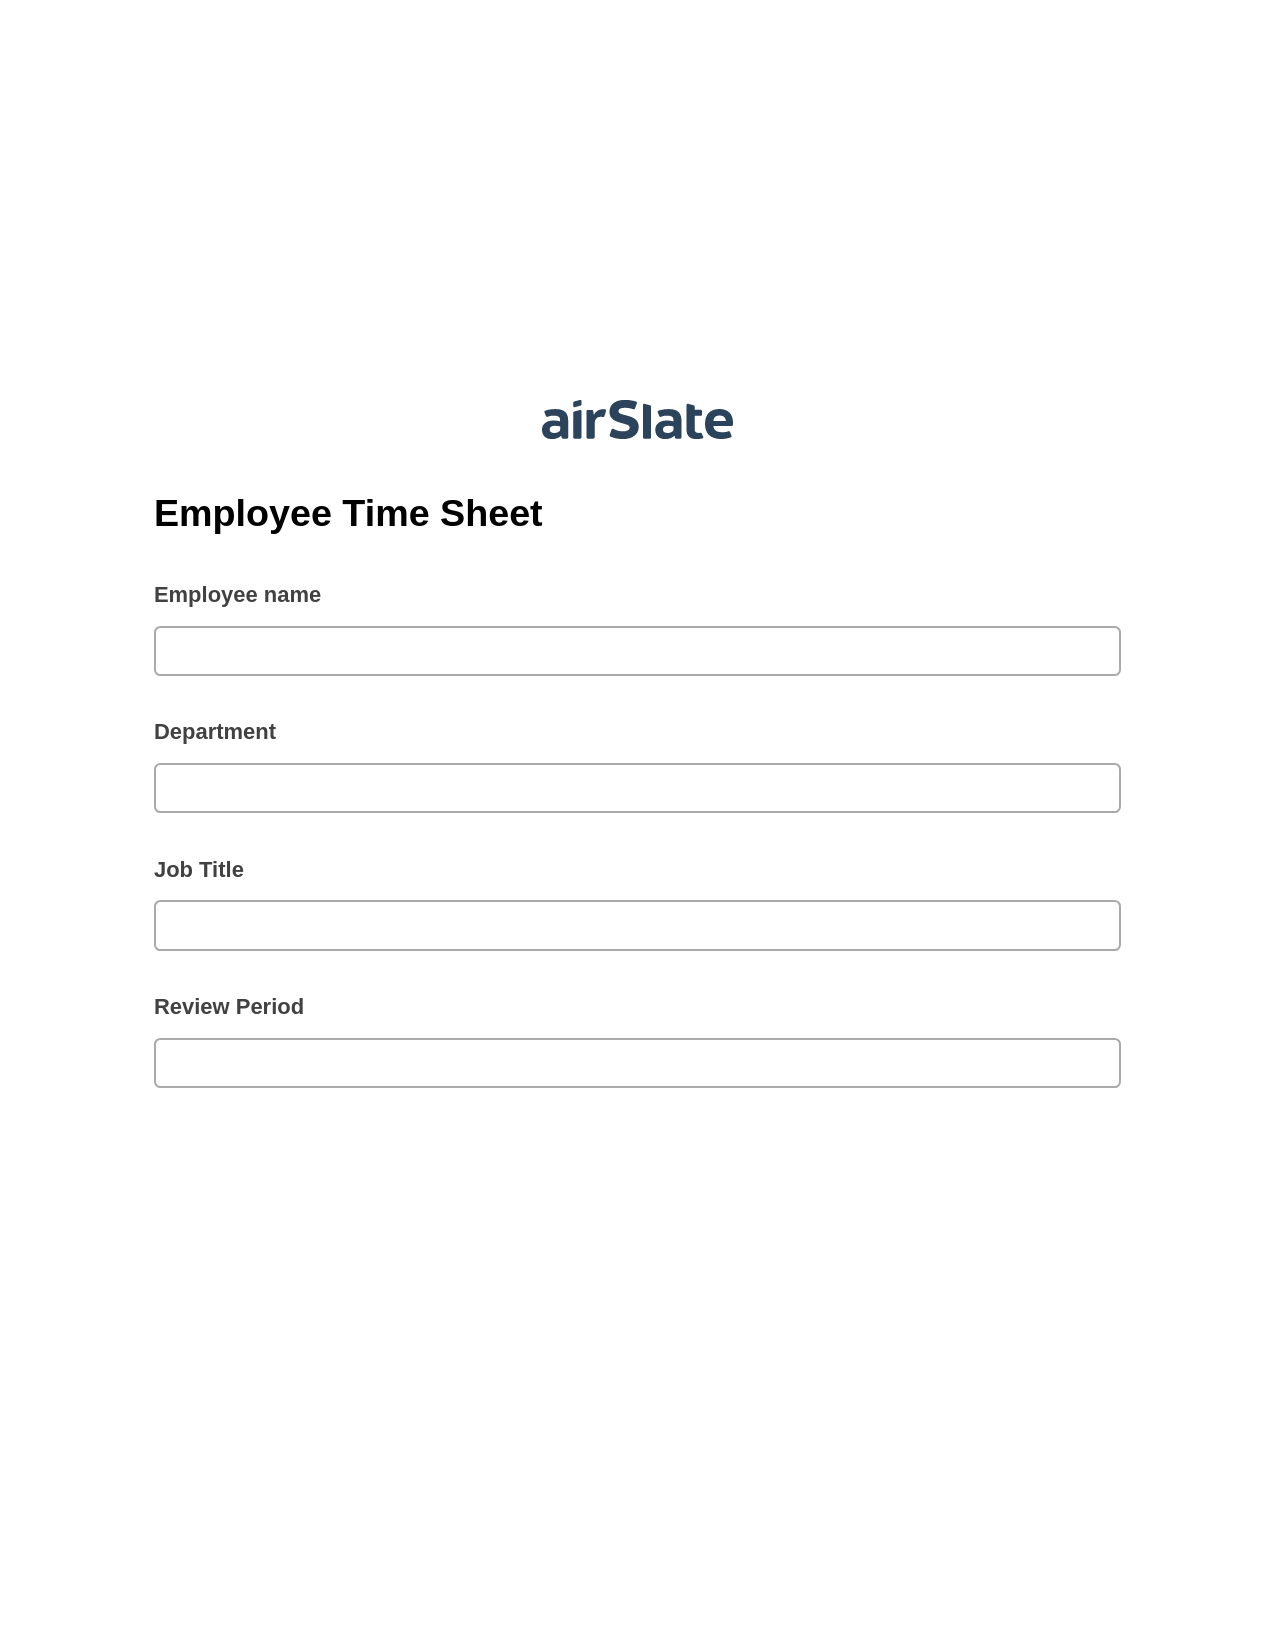 Employee Time Sheet Pre-fill from CSV File Bot, Update Audit Trail Bot, Webhook Postfinish Bot